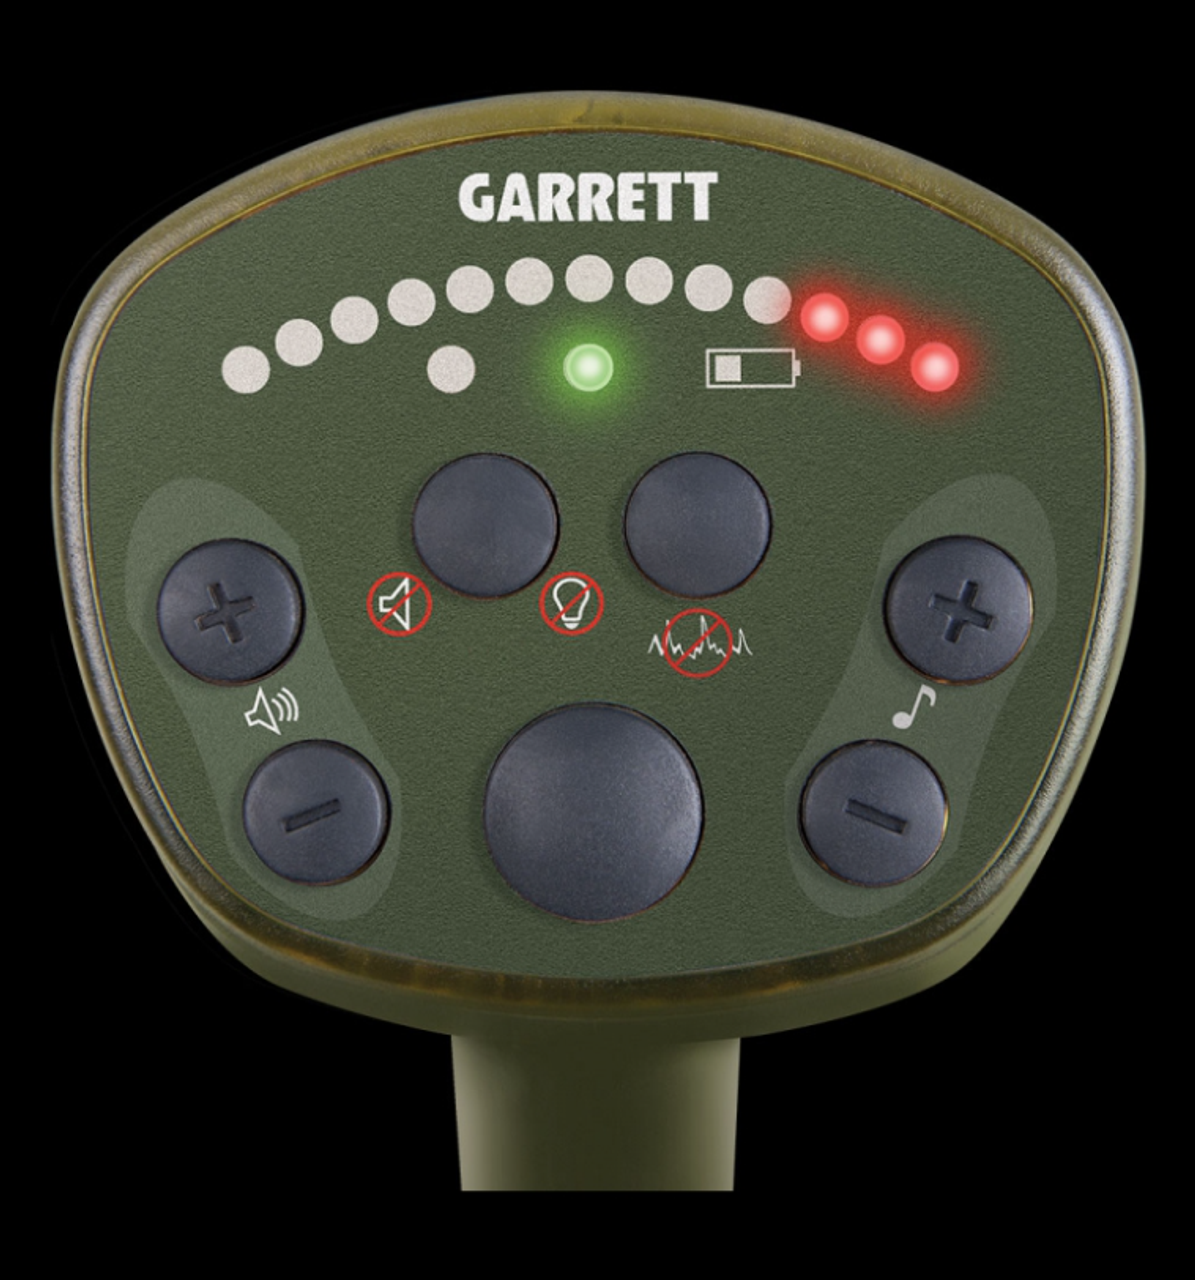 Garrett ACE 300 Metal Detector, Headphones, Travel Bag, Pouch, Waterproof  Coil +